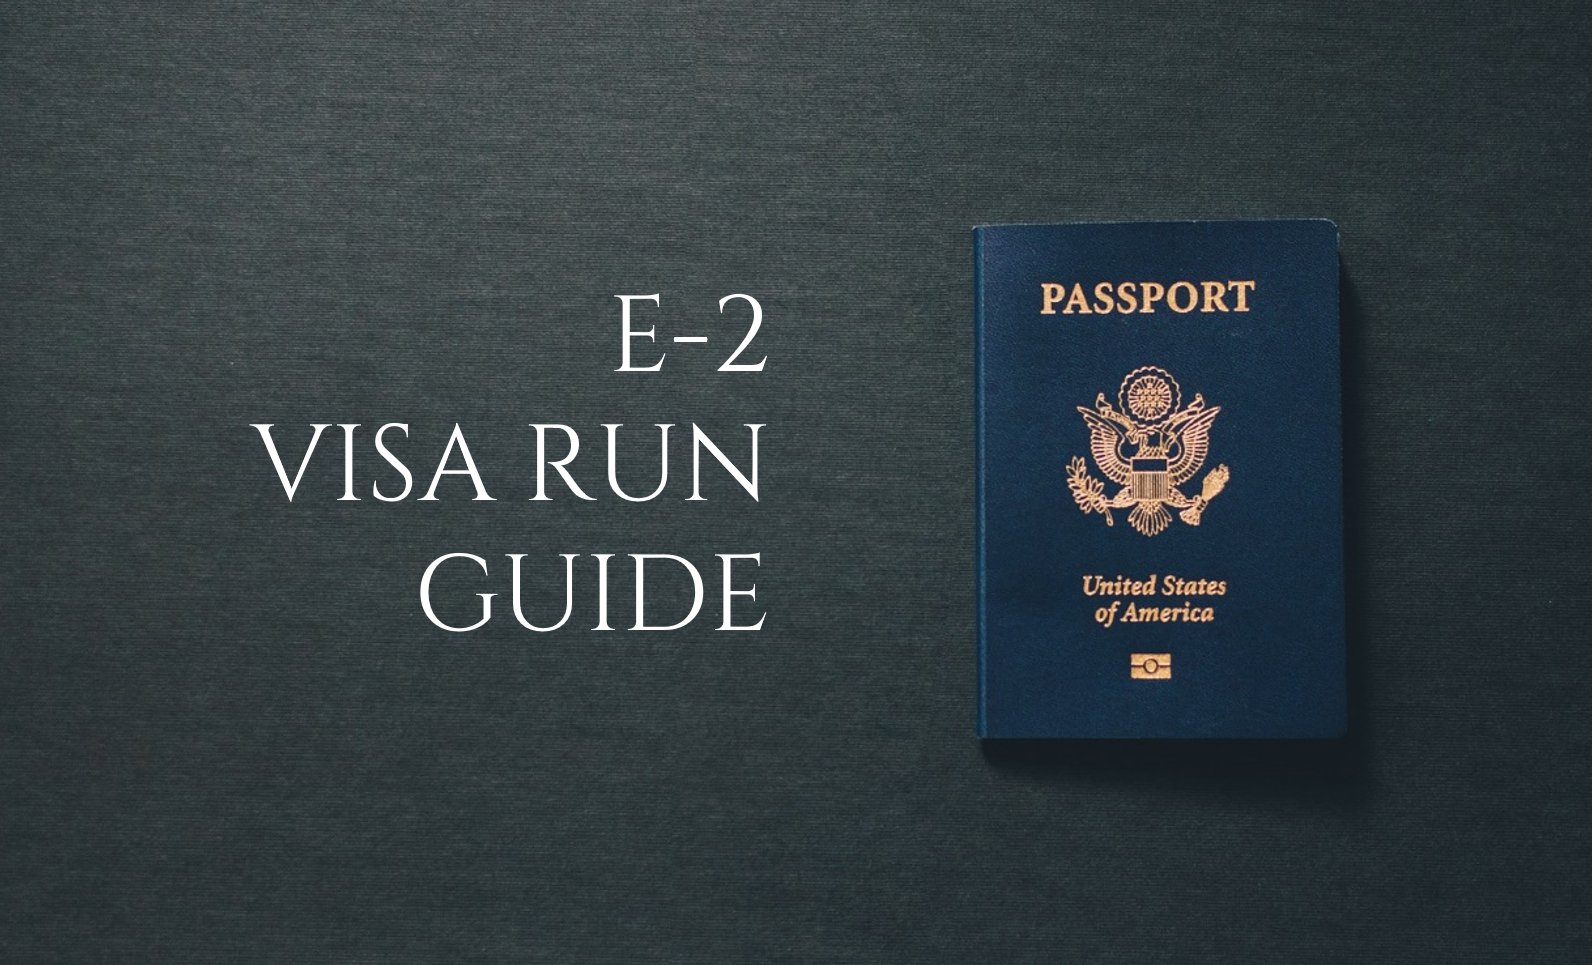 E-2 Visa Run Guide